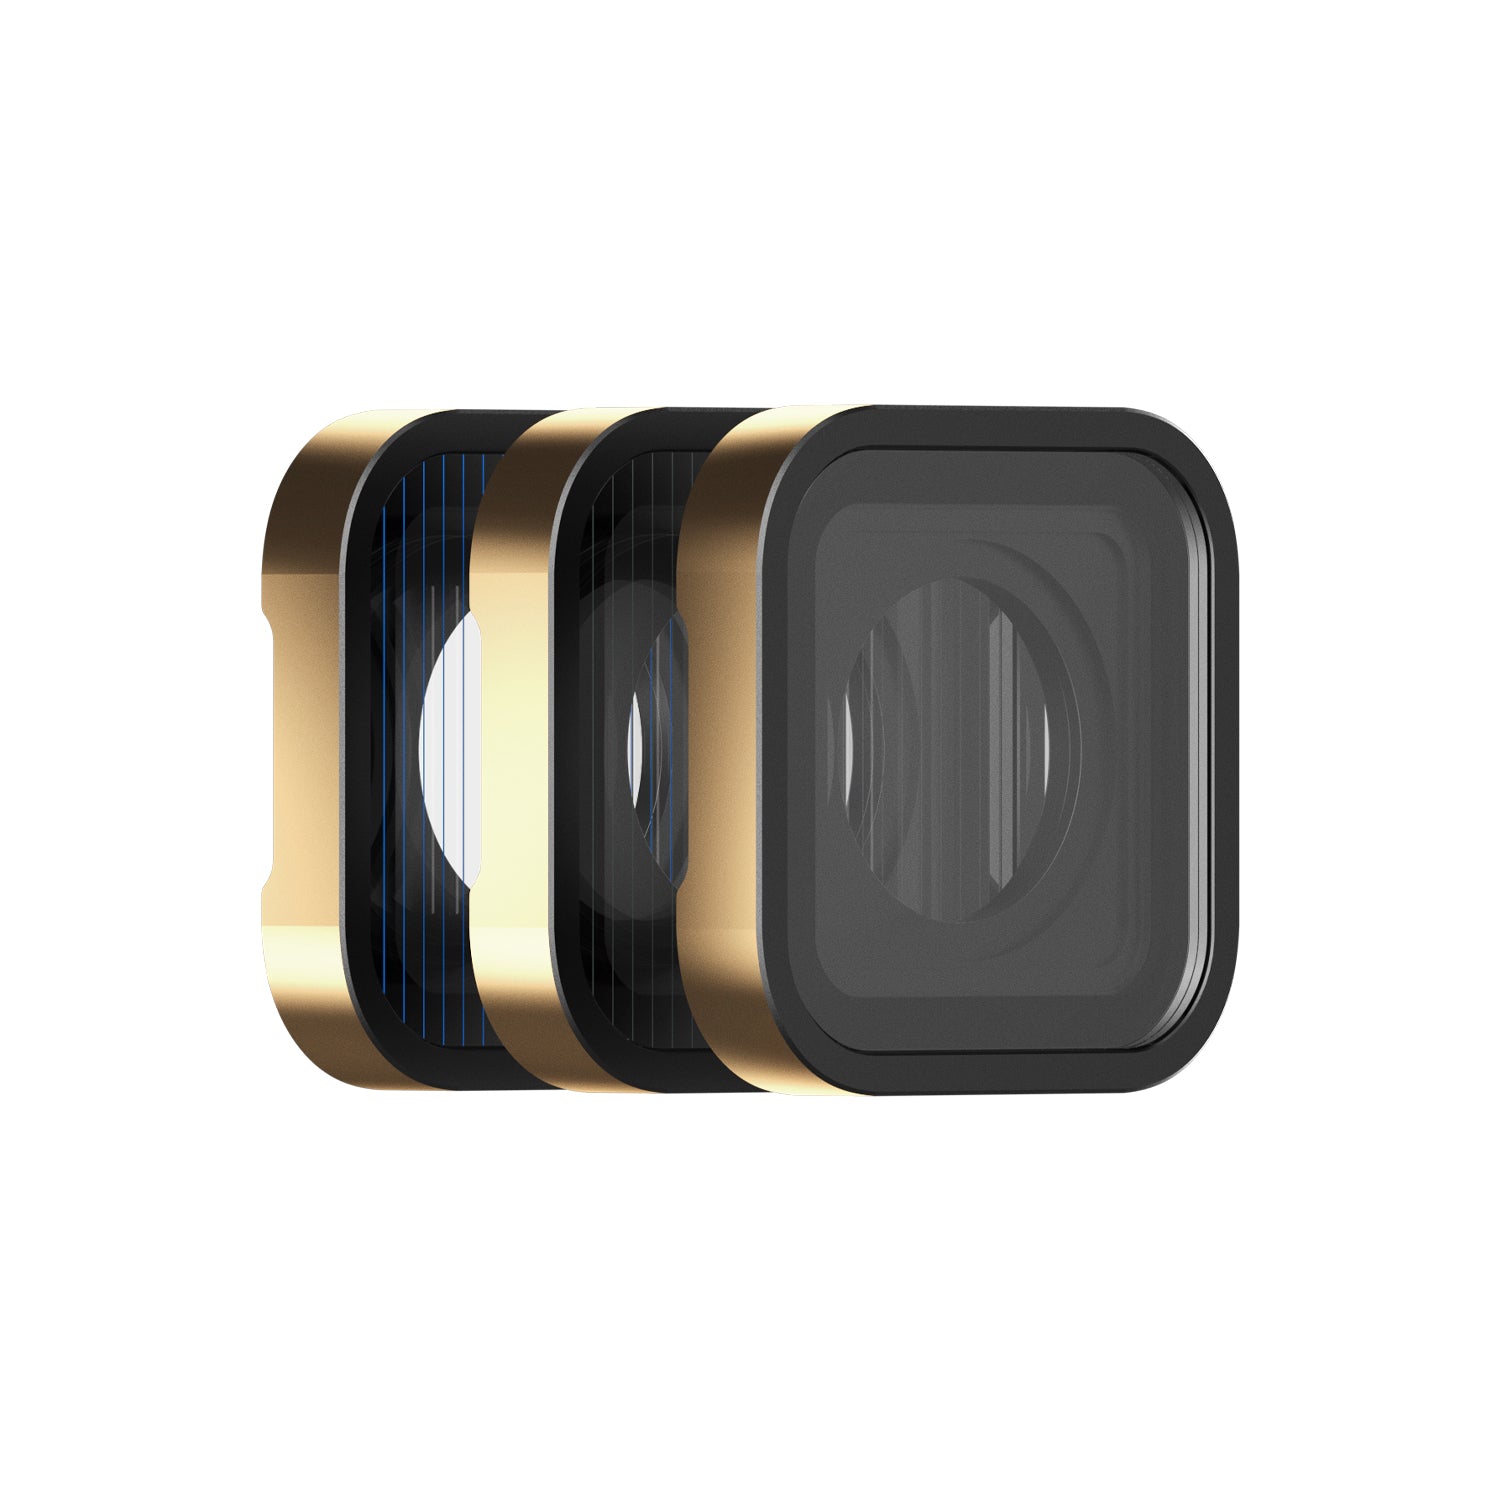 FX Filters   GoPro HERO Black   Innovative Gear for